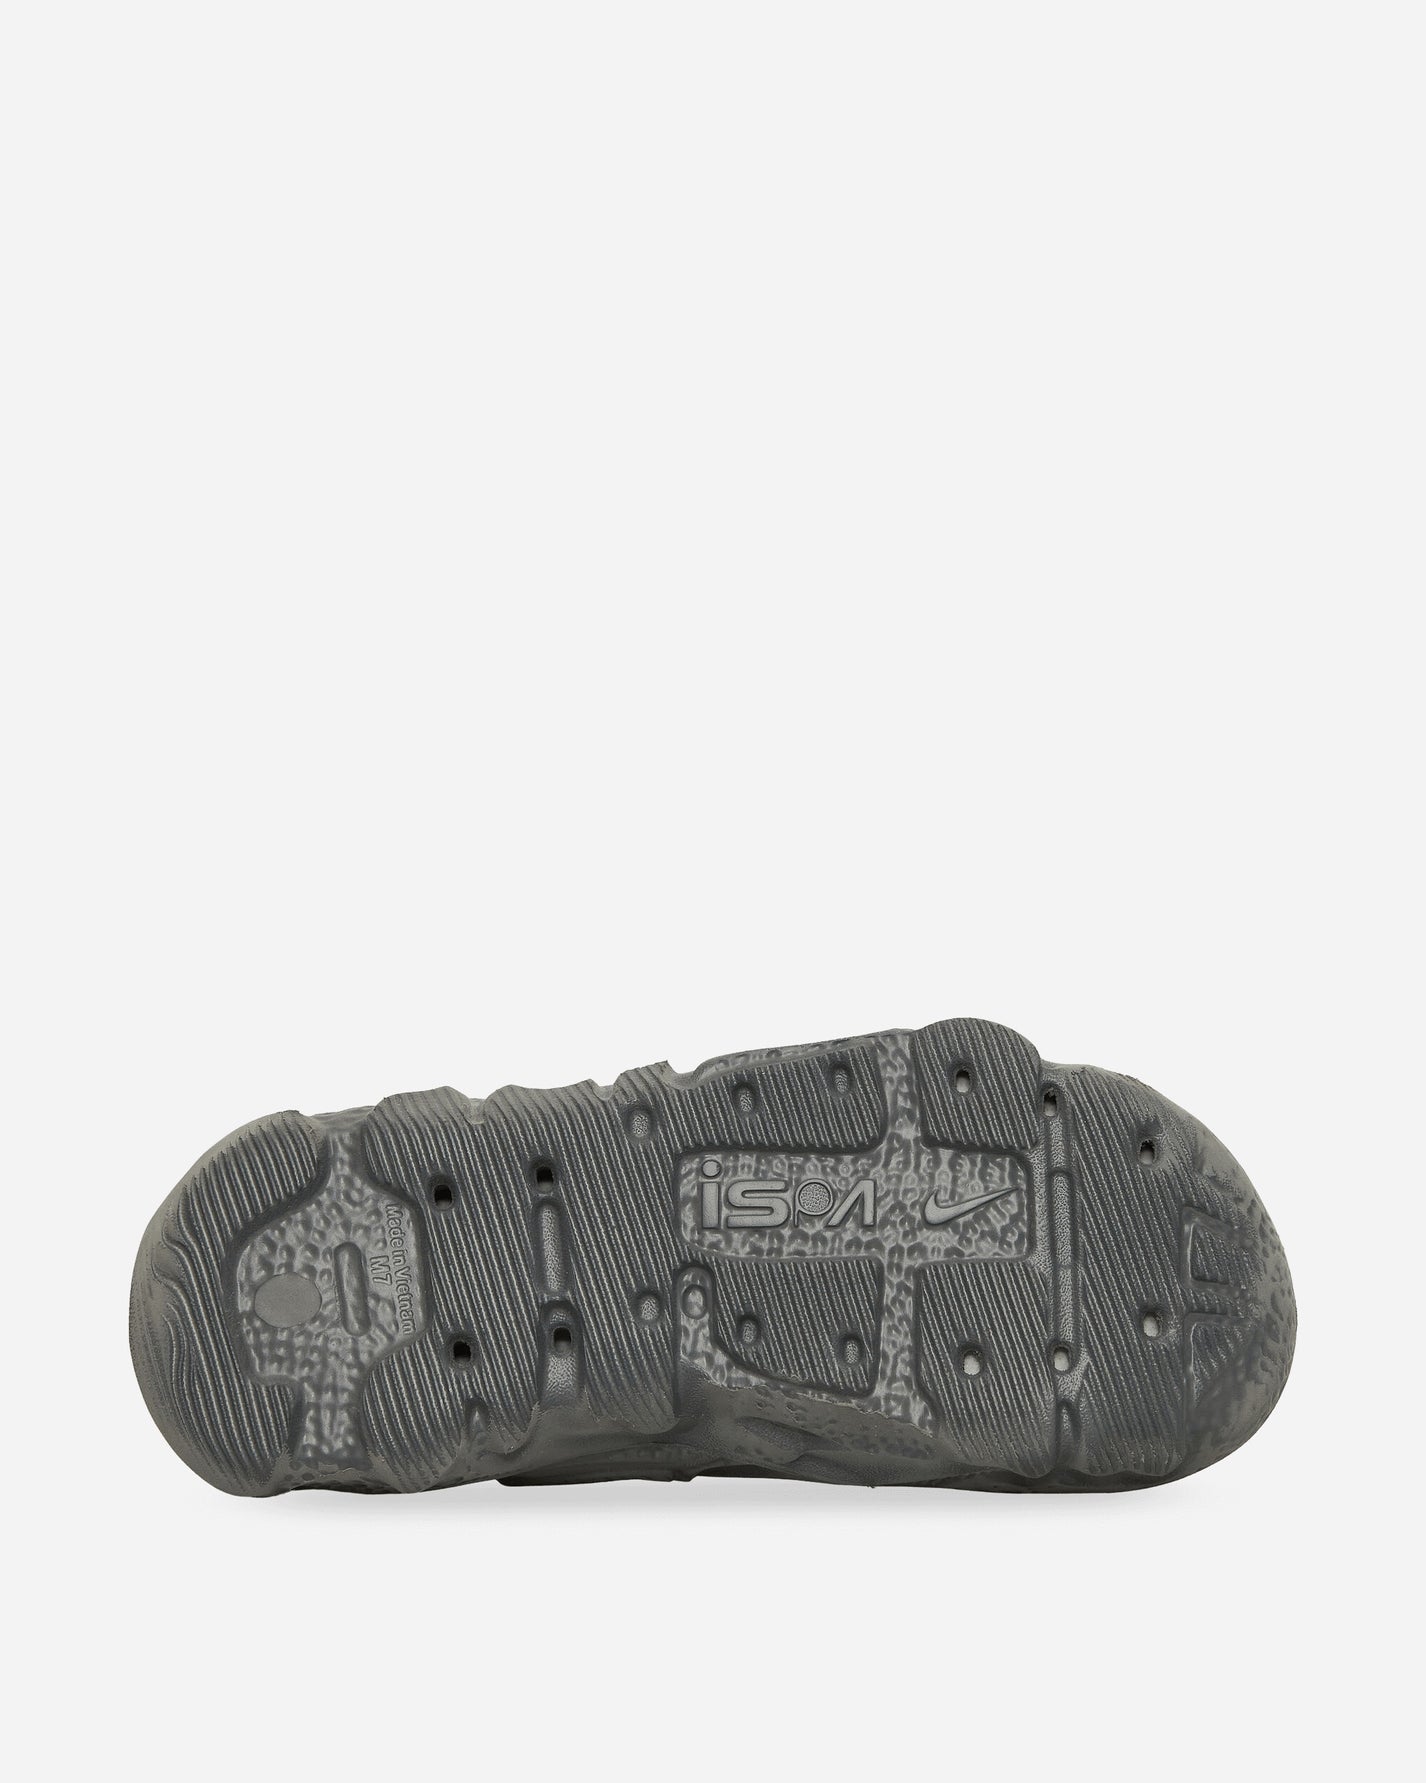 Nike Ispa Universal Smoke Grey/Smoke Grey Sandals and Slides Sandals and Mules DM0886-001